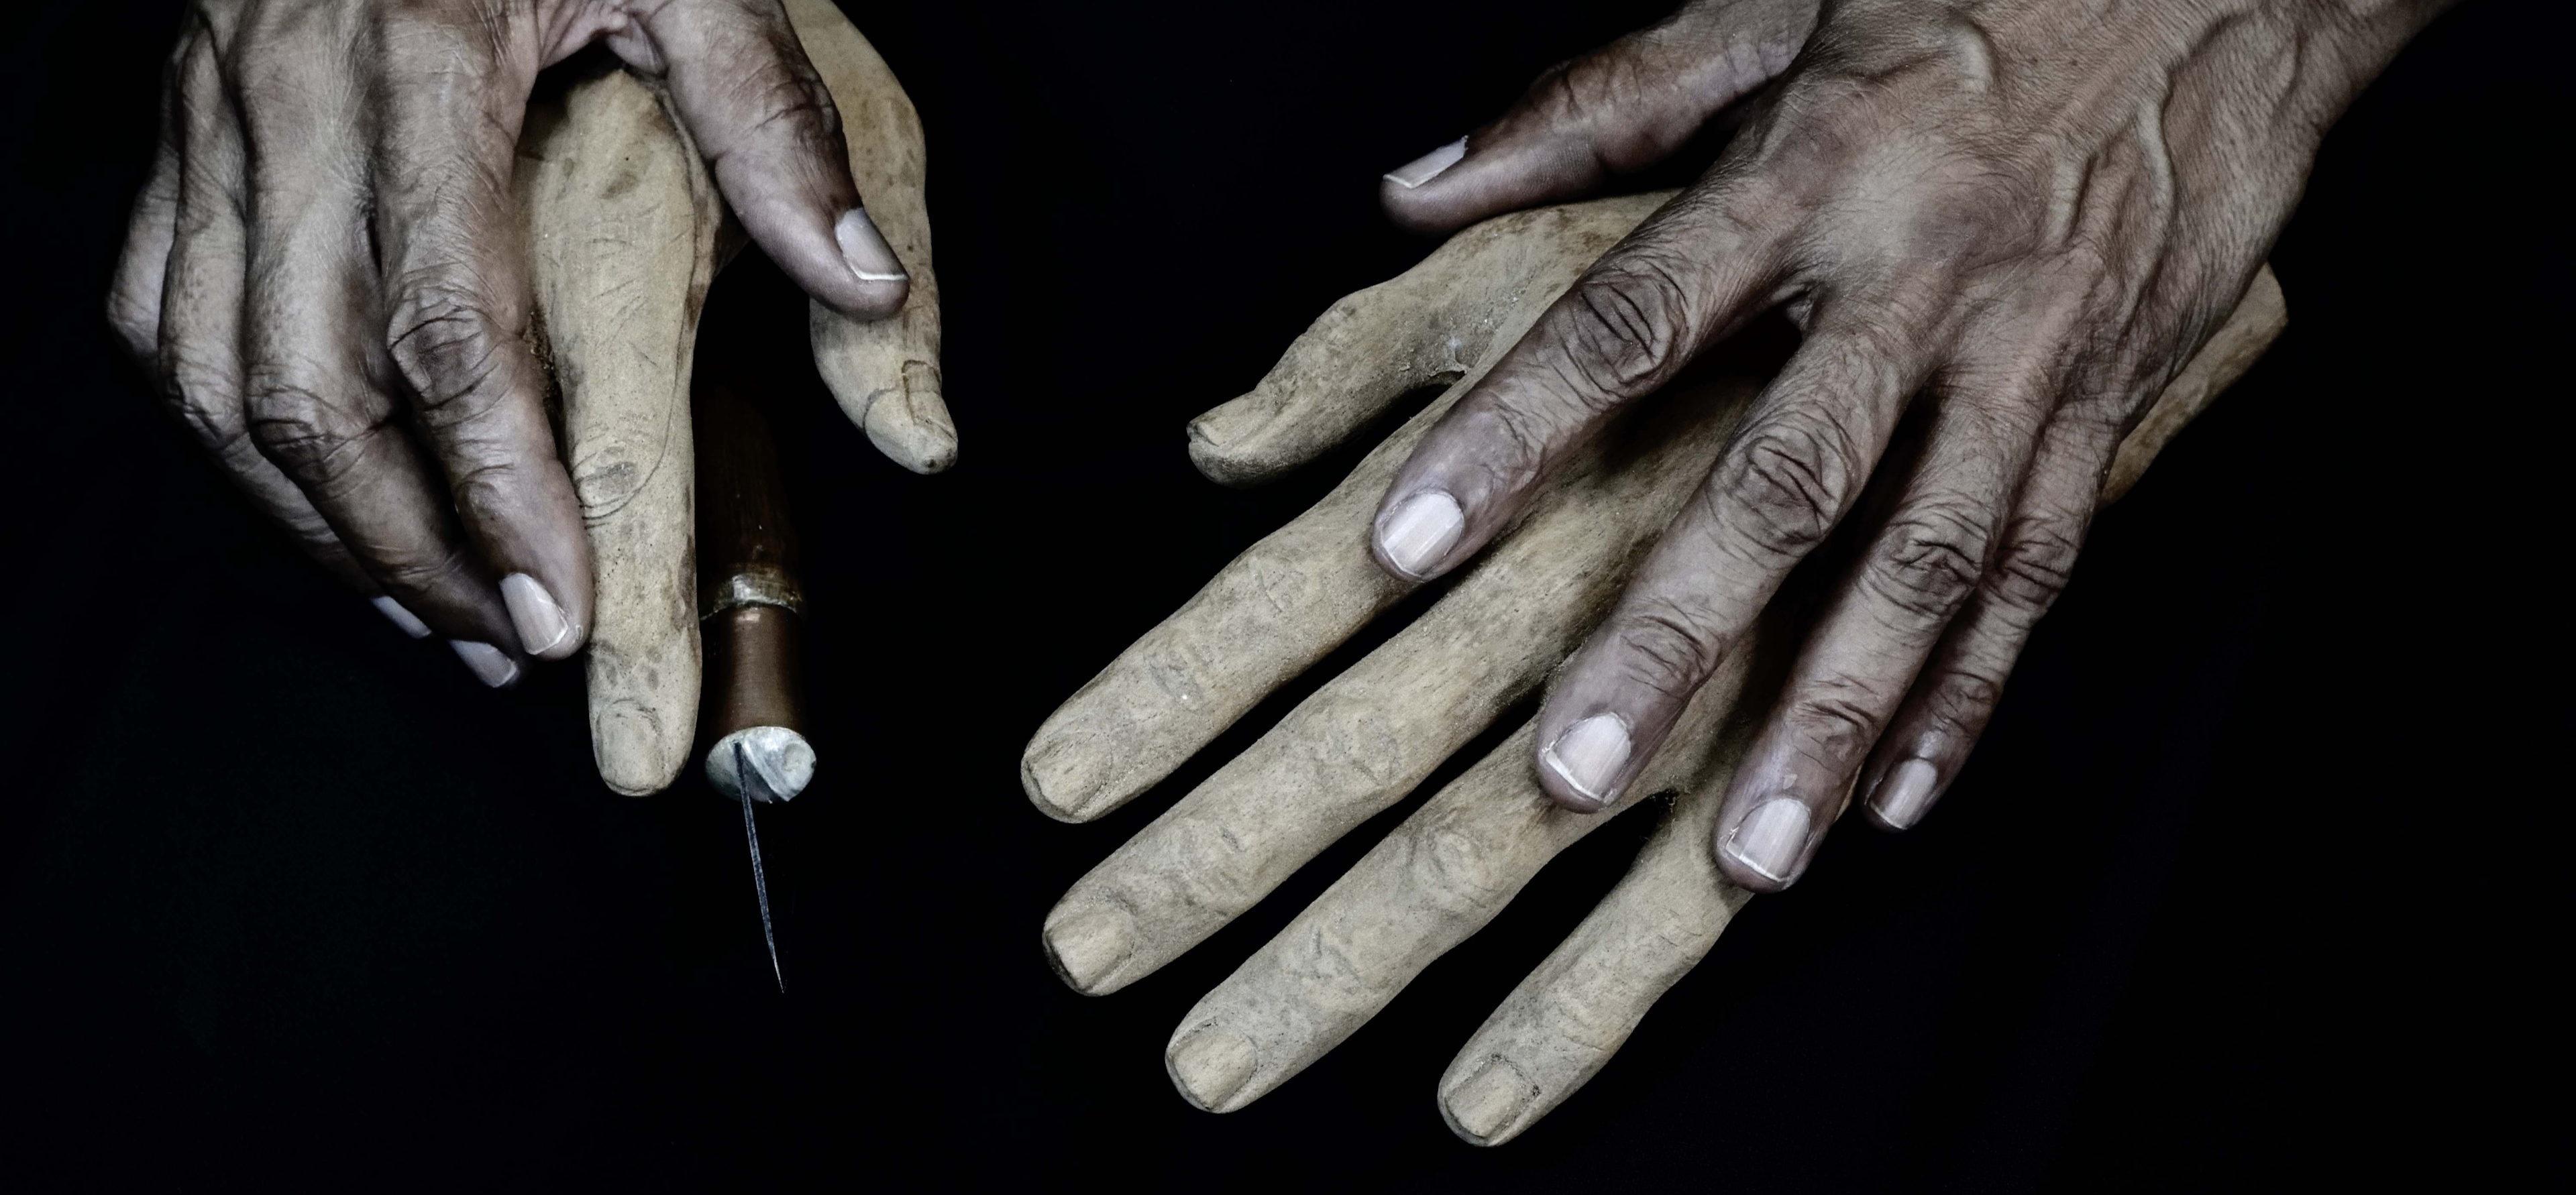 Hands of local artisan